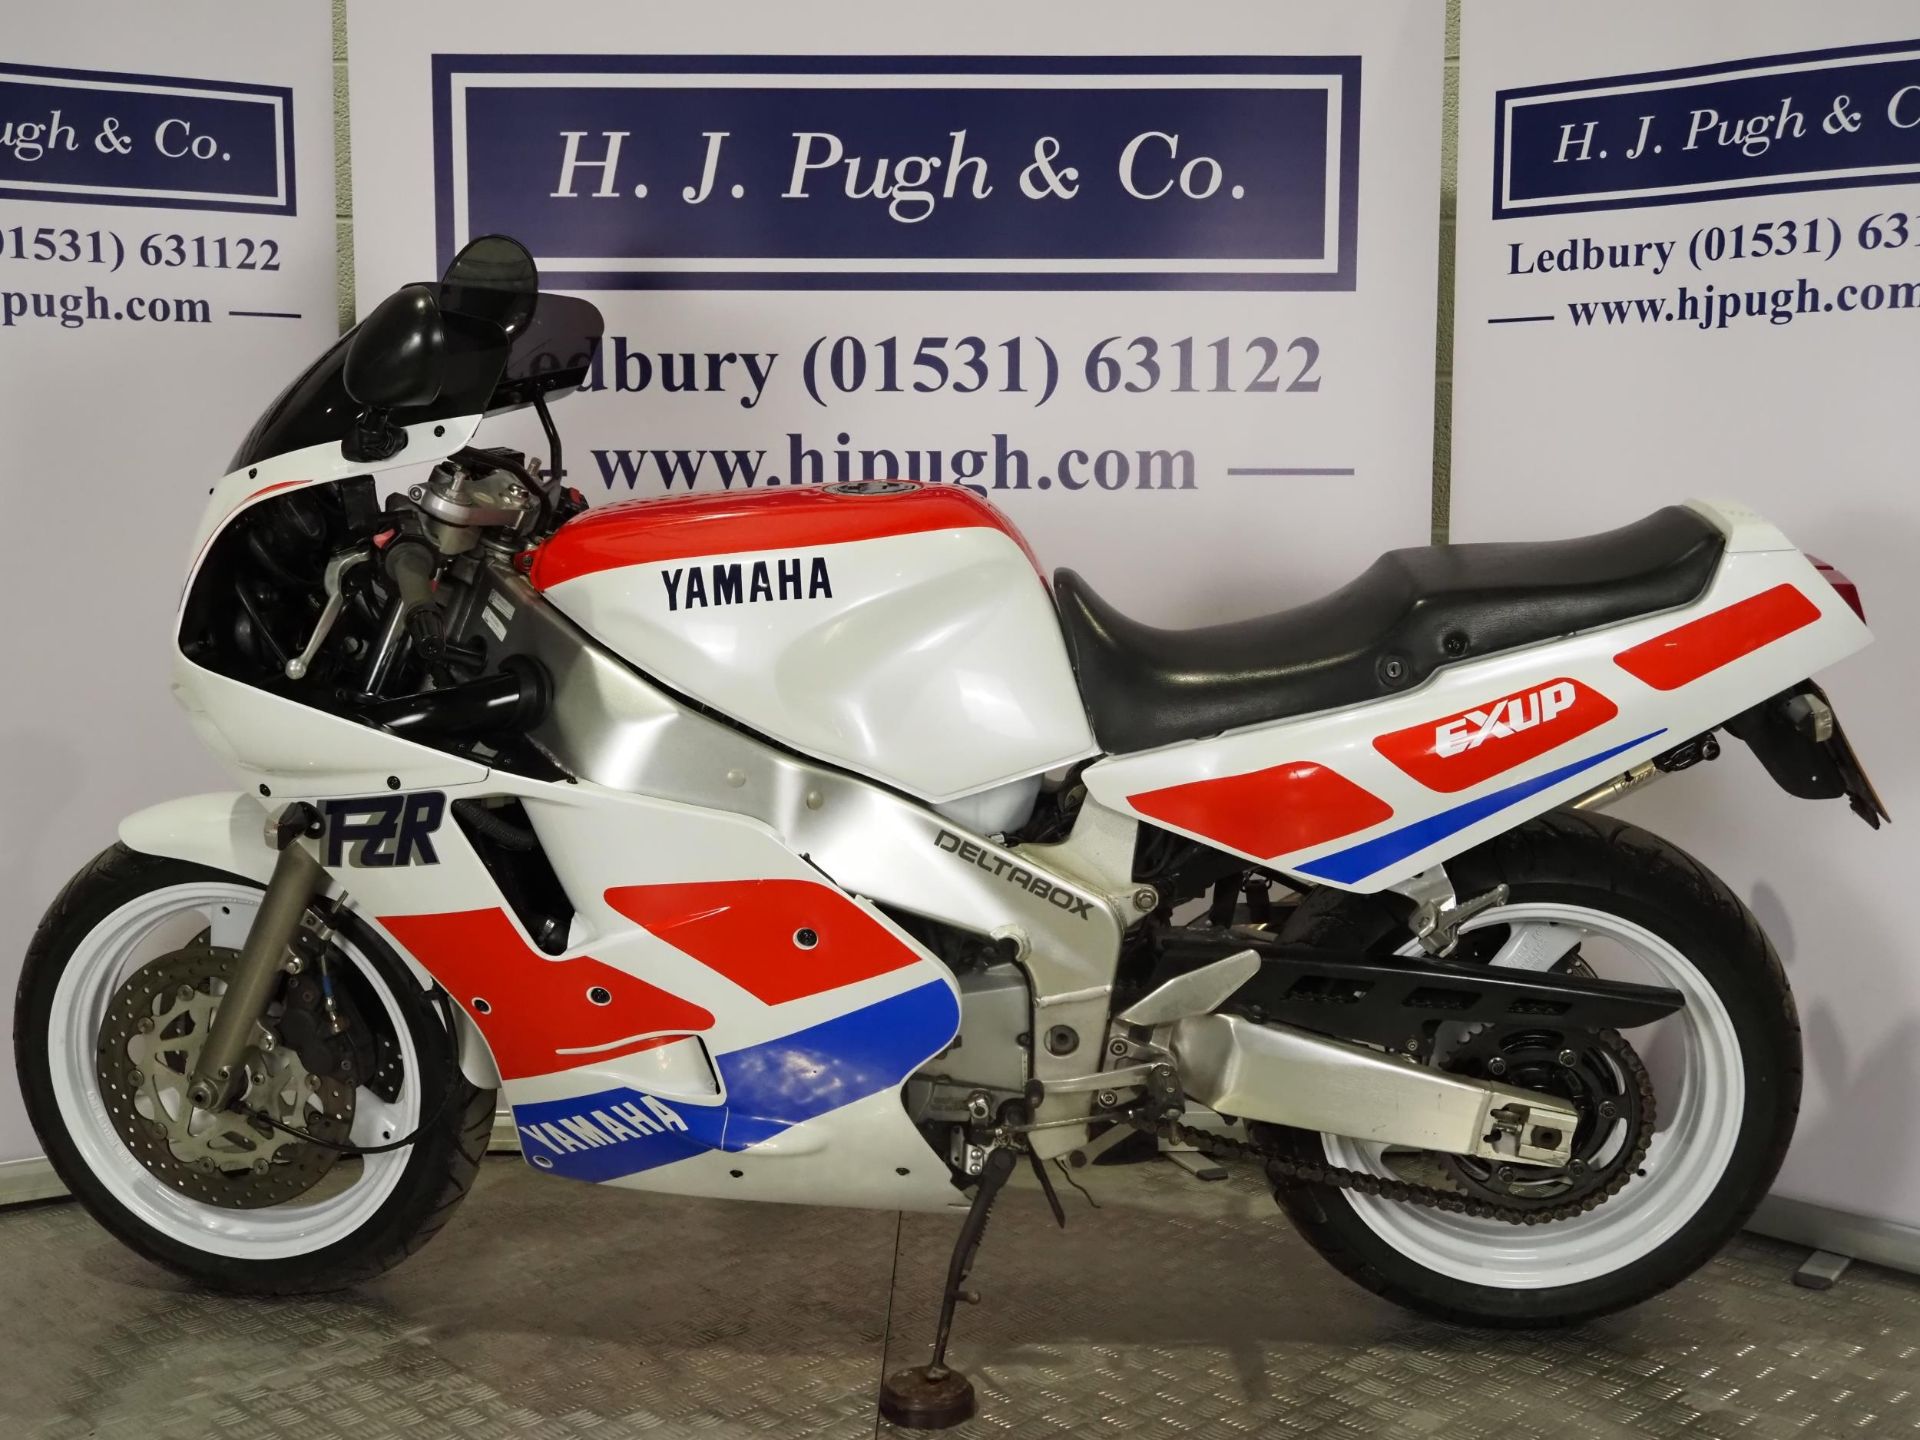 Yamaha FZR1000 exup motorcycle. 1990. 1002cc Runs and rides. Reg. H684 FLK. V5. Key - Bild 7 aus 7